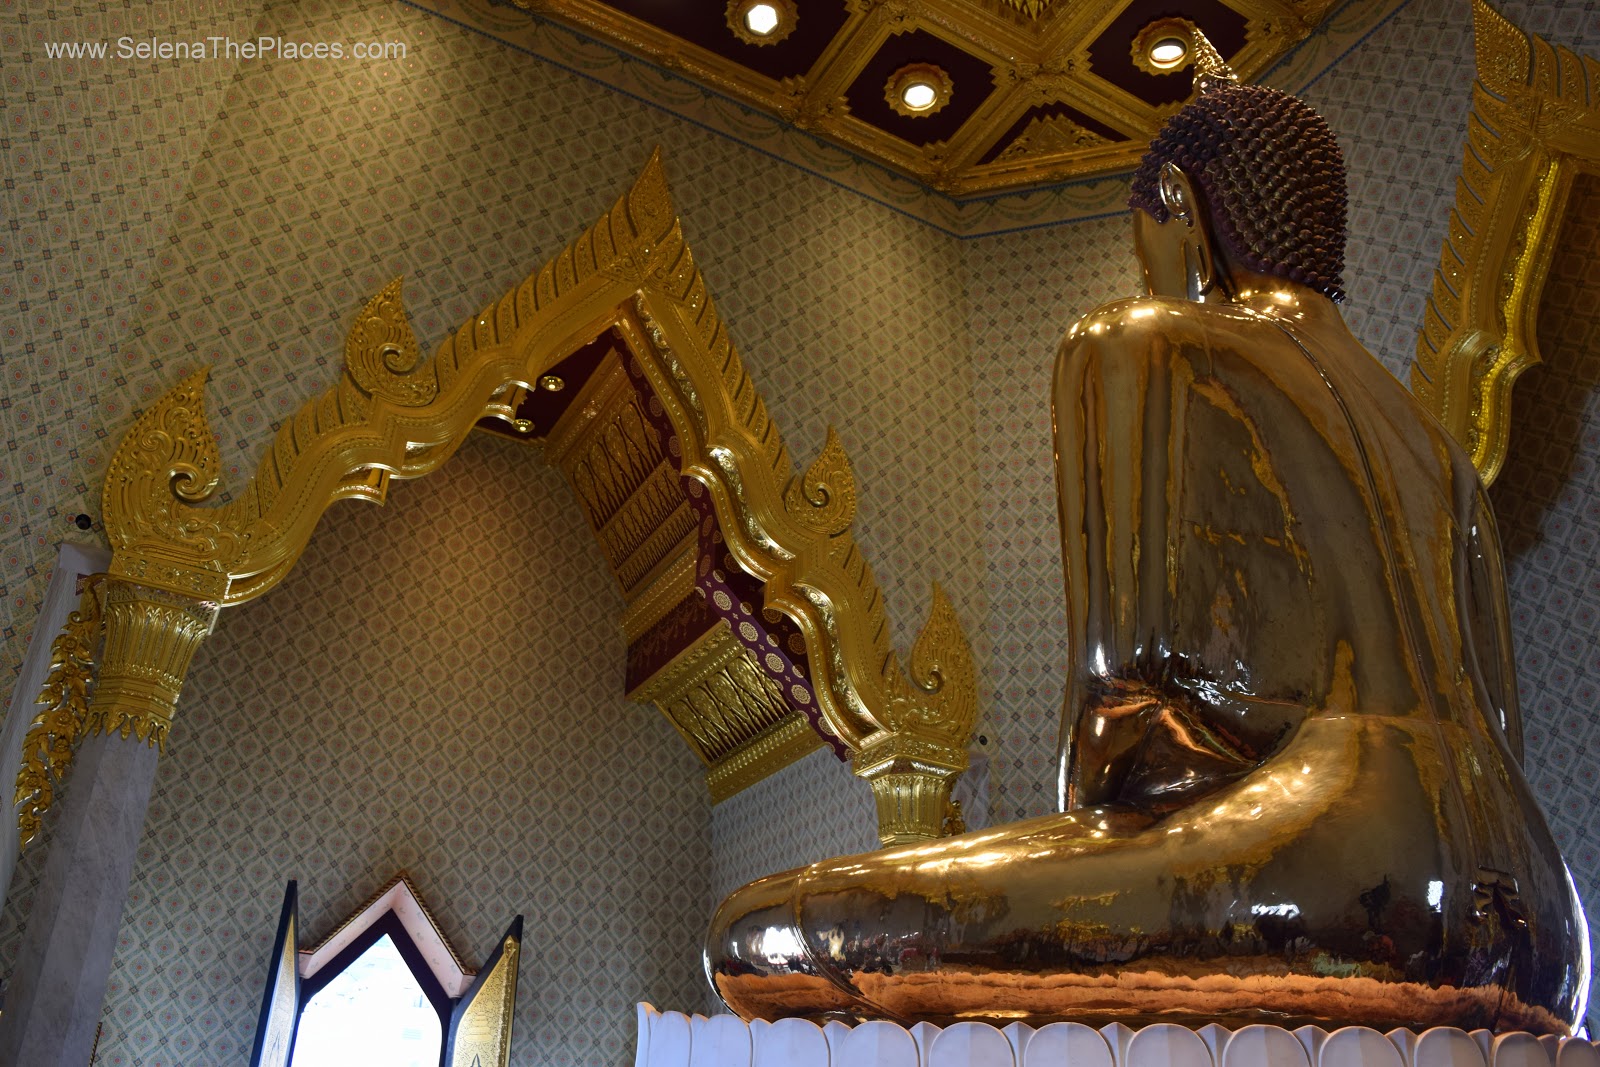 Golden Buddha of Wat Traimit Bangkok Thailand